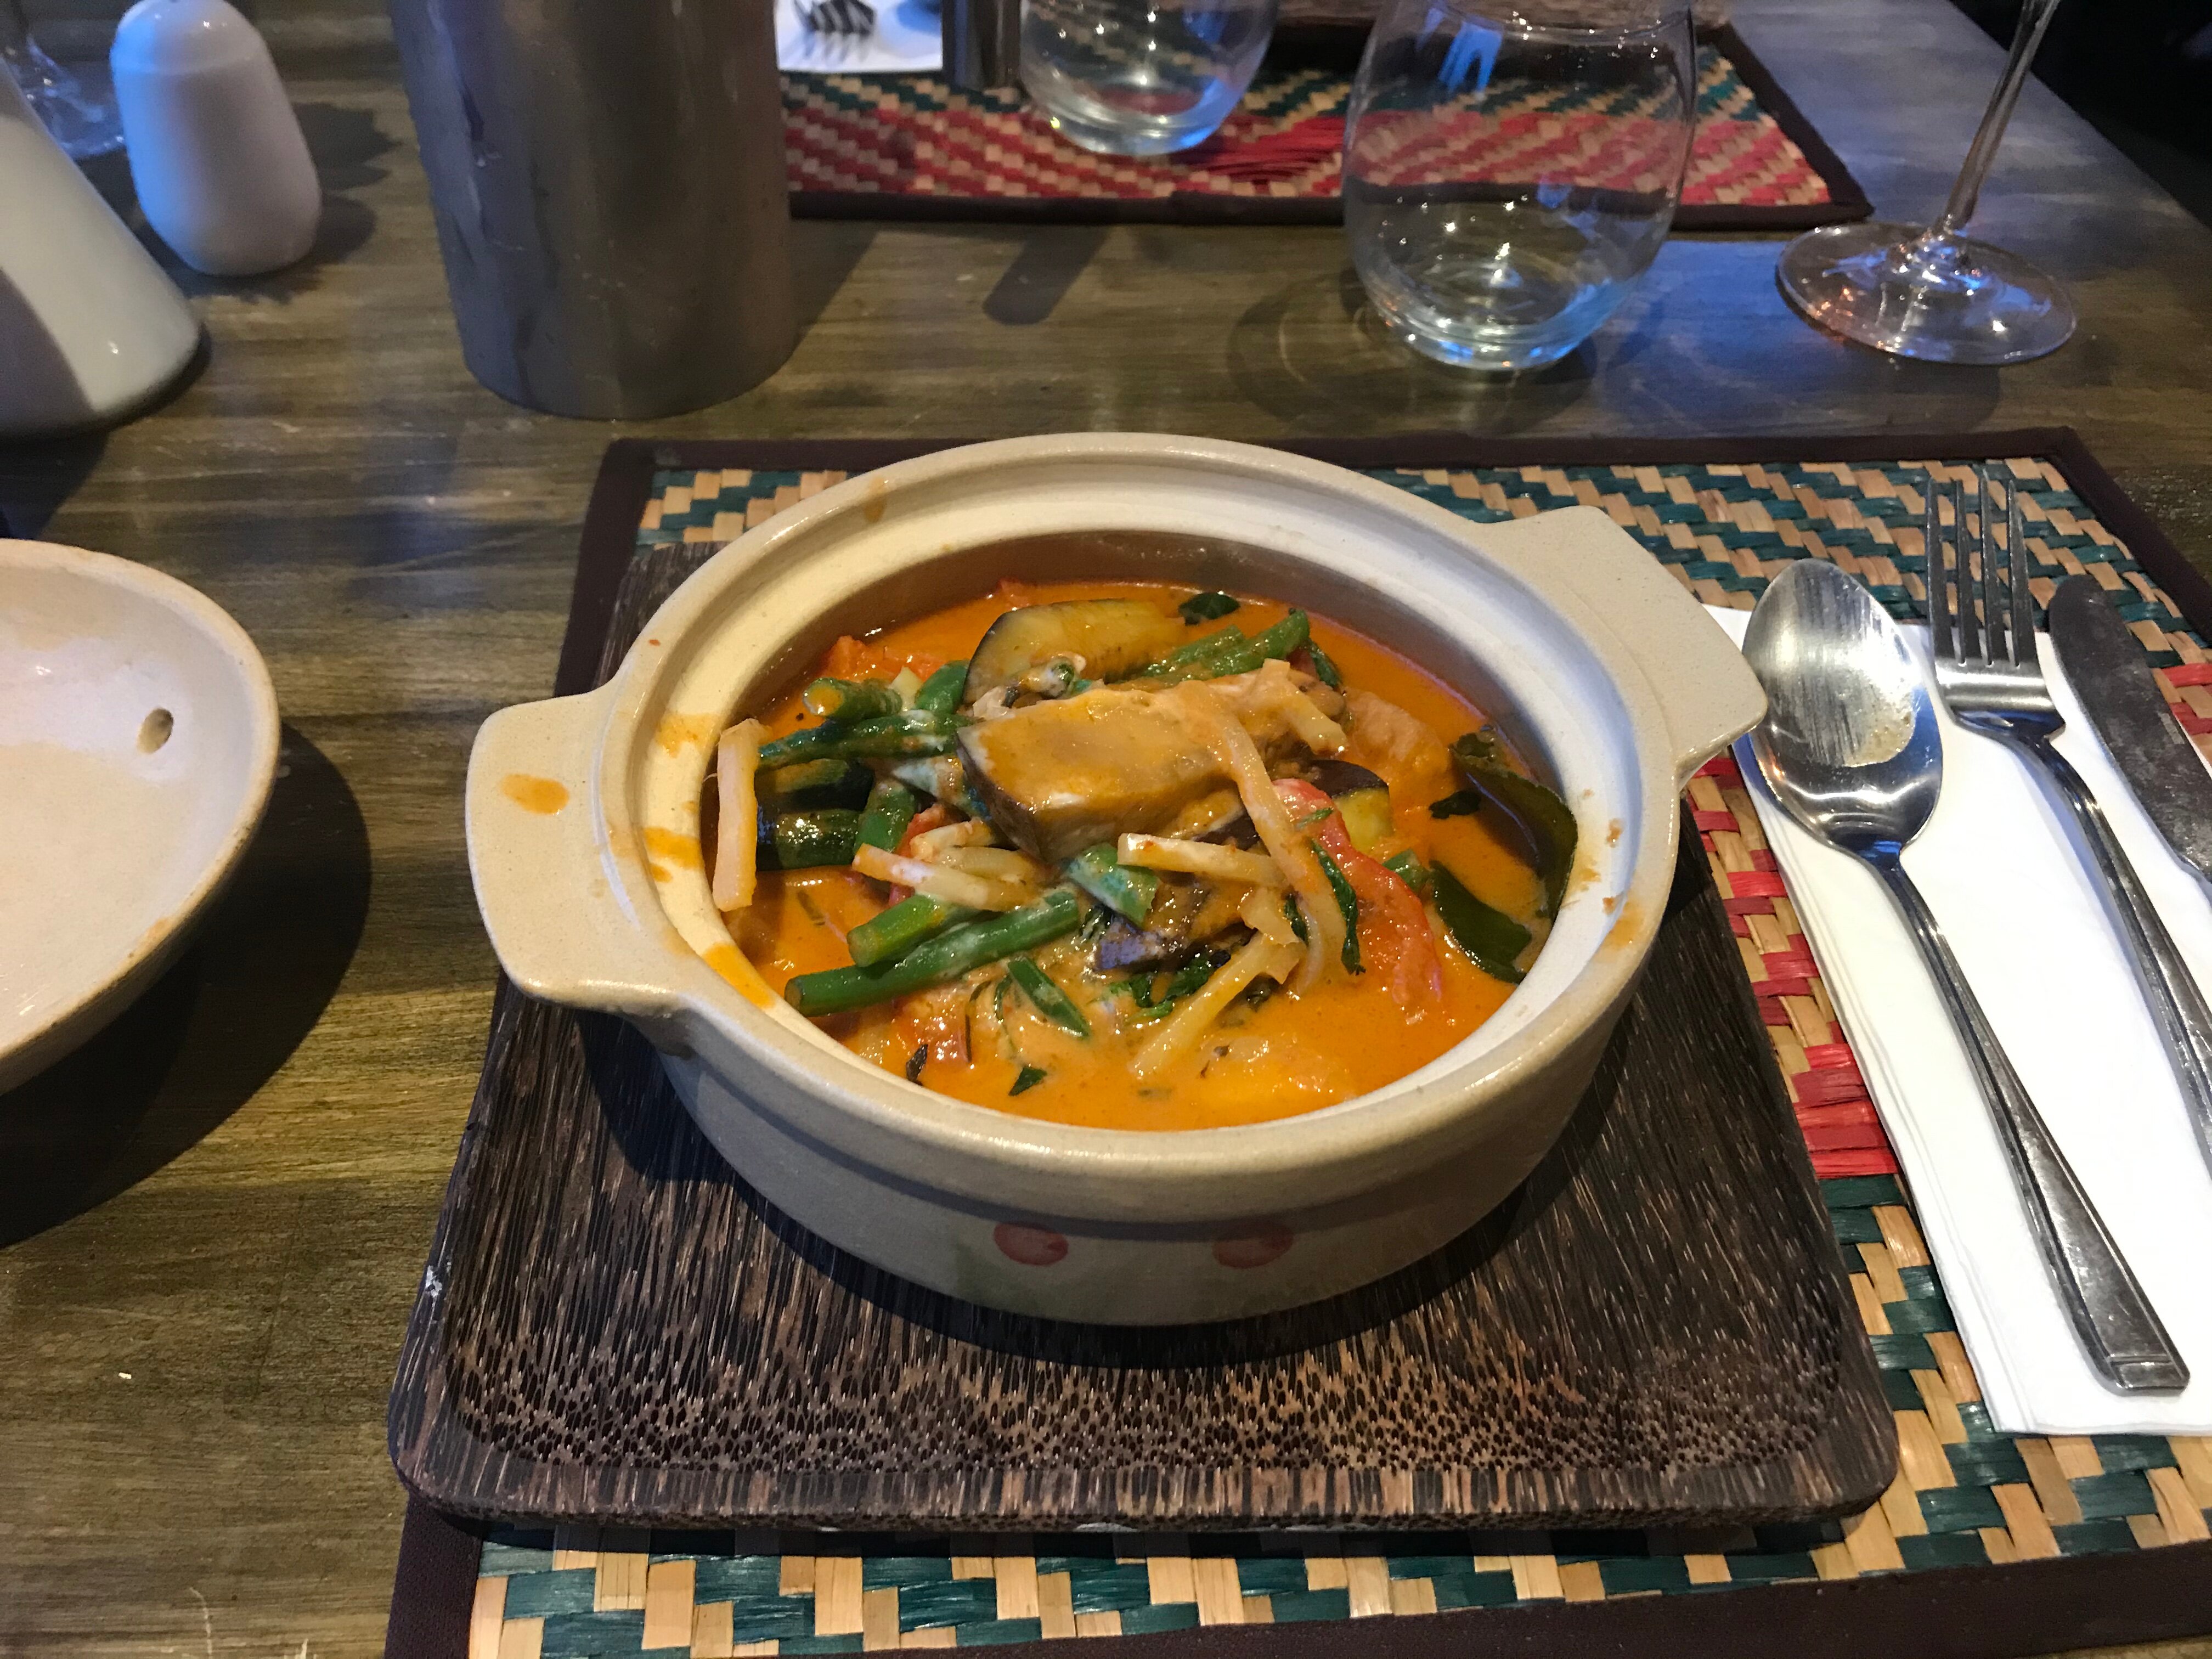 Thai cuisine express Liverpool Ltd